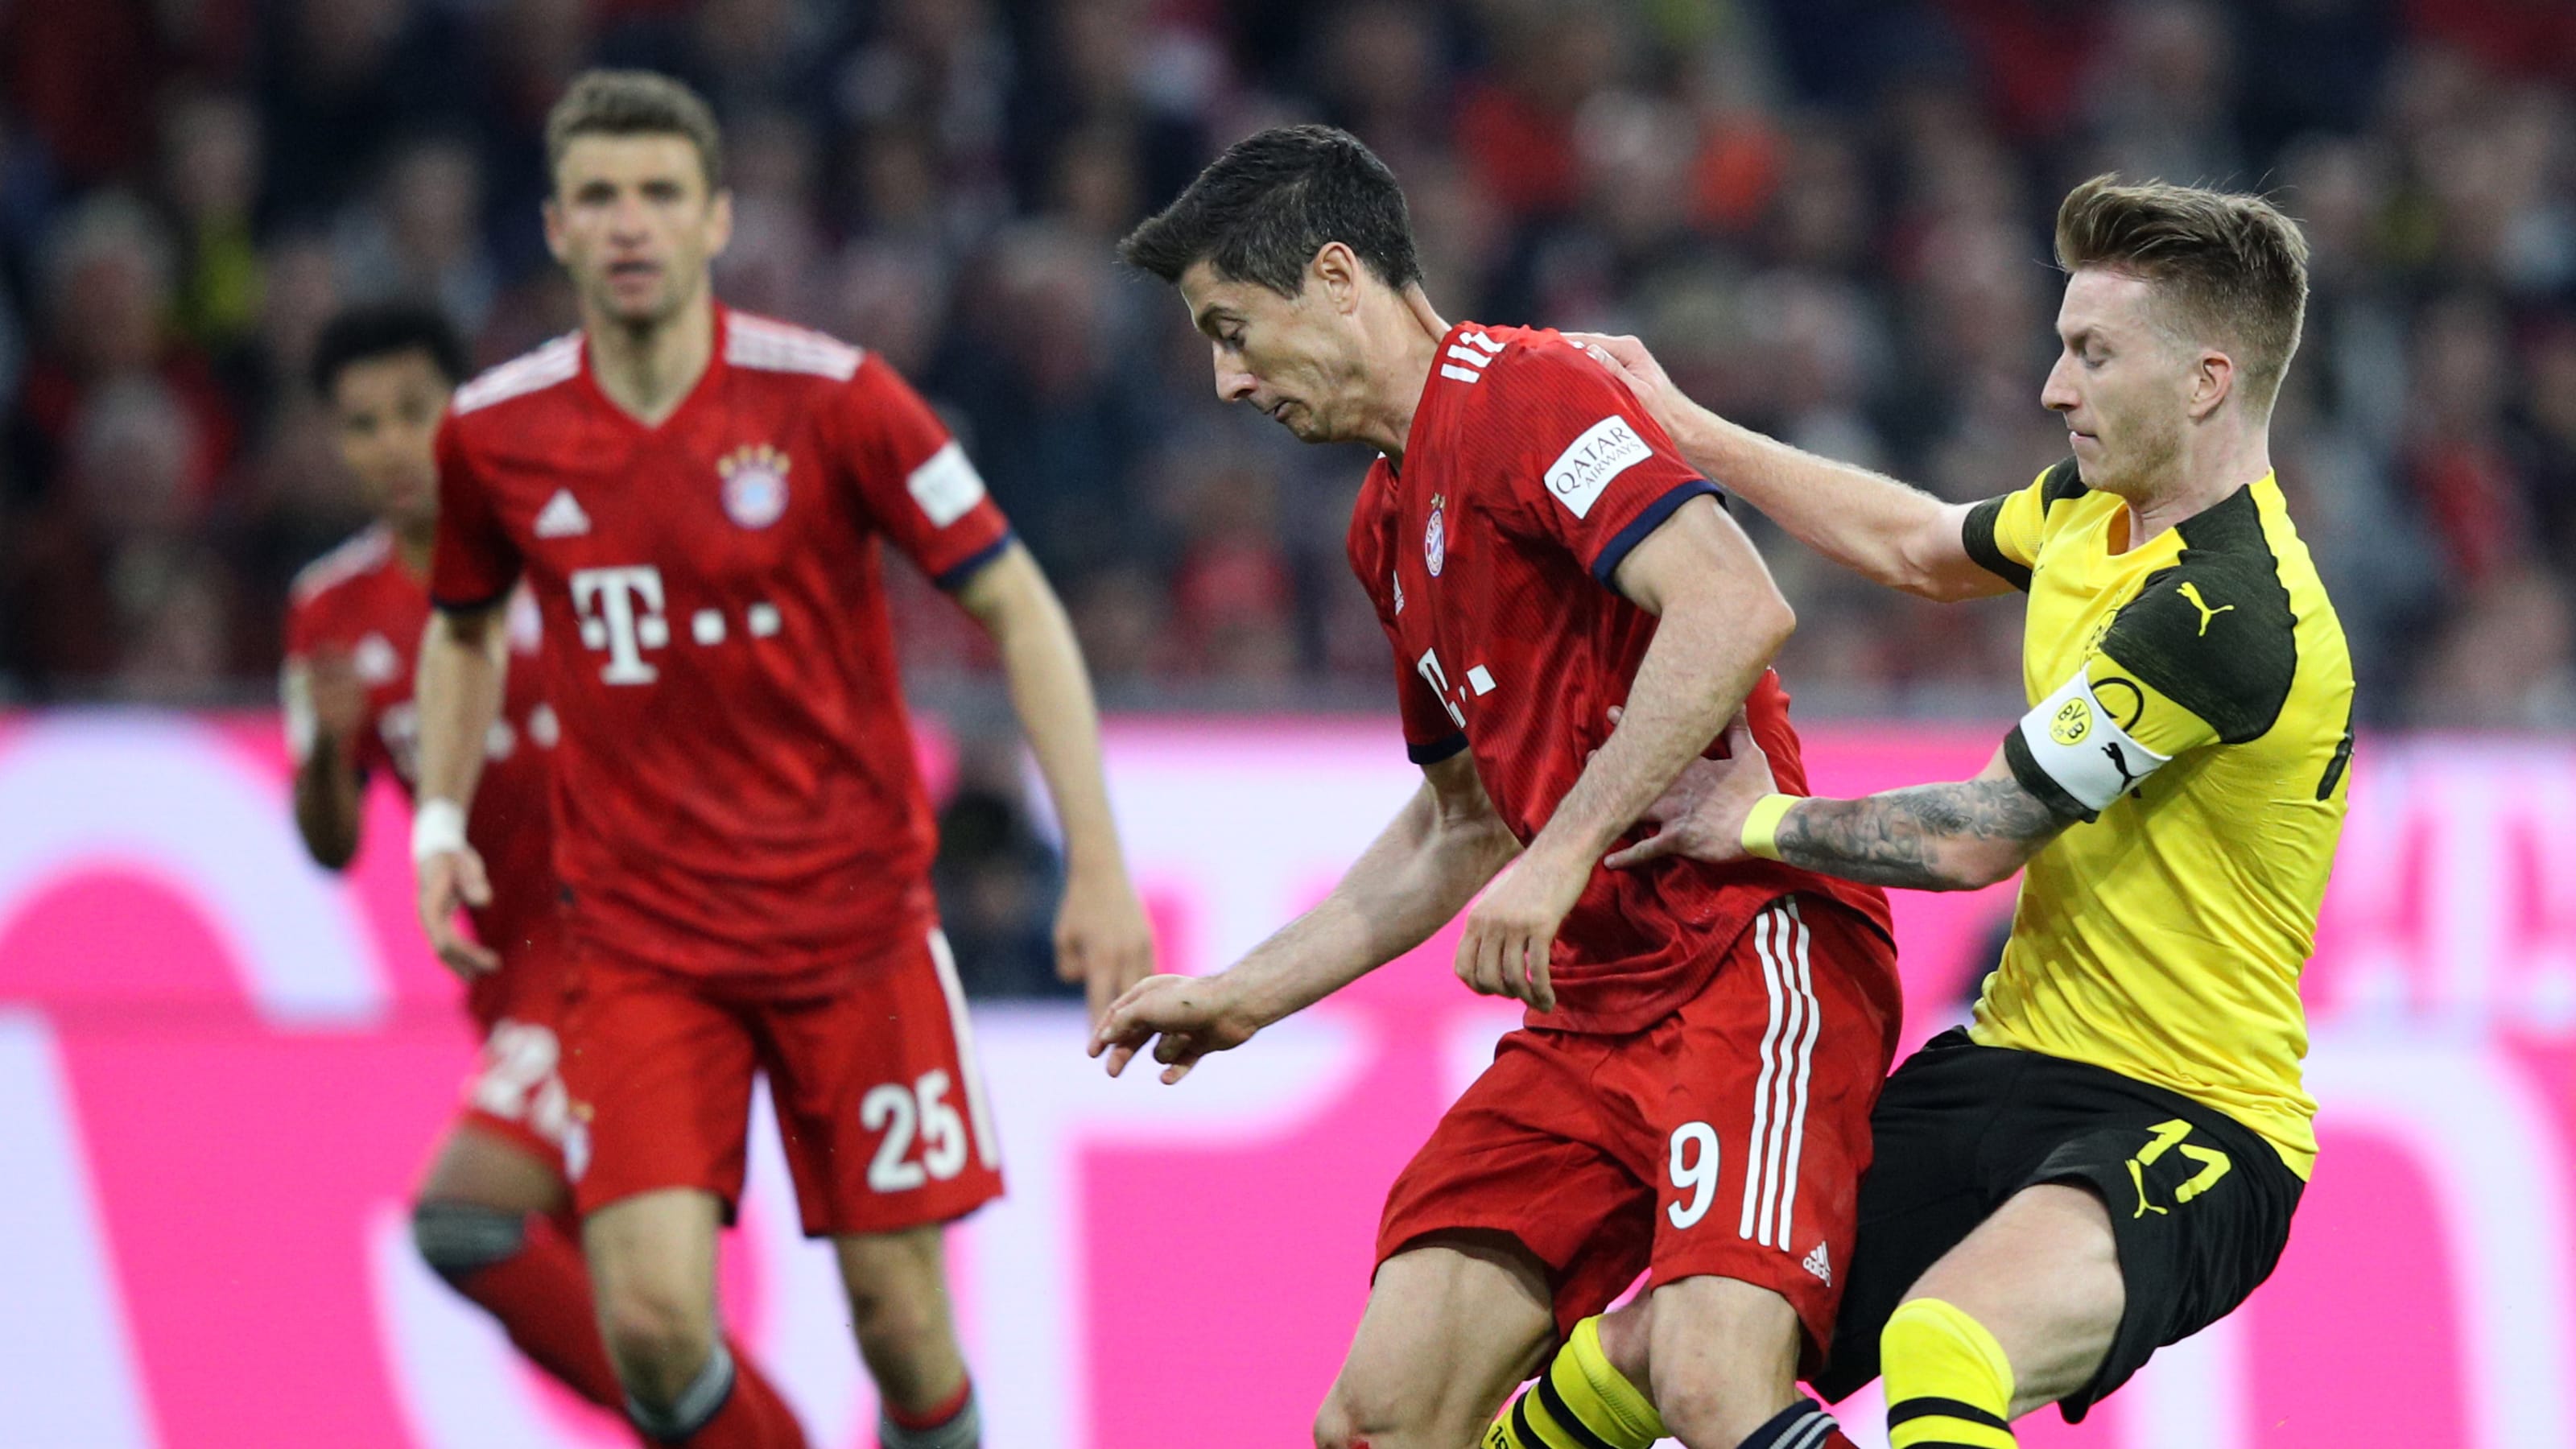 Borussia Dortmund Vs Bayern Munich Bundesliga 21 22 Know Where To Watch Live Streaming And Telecast In India